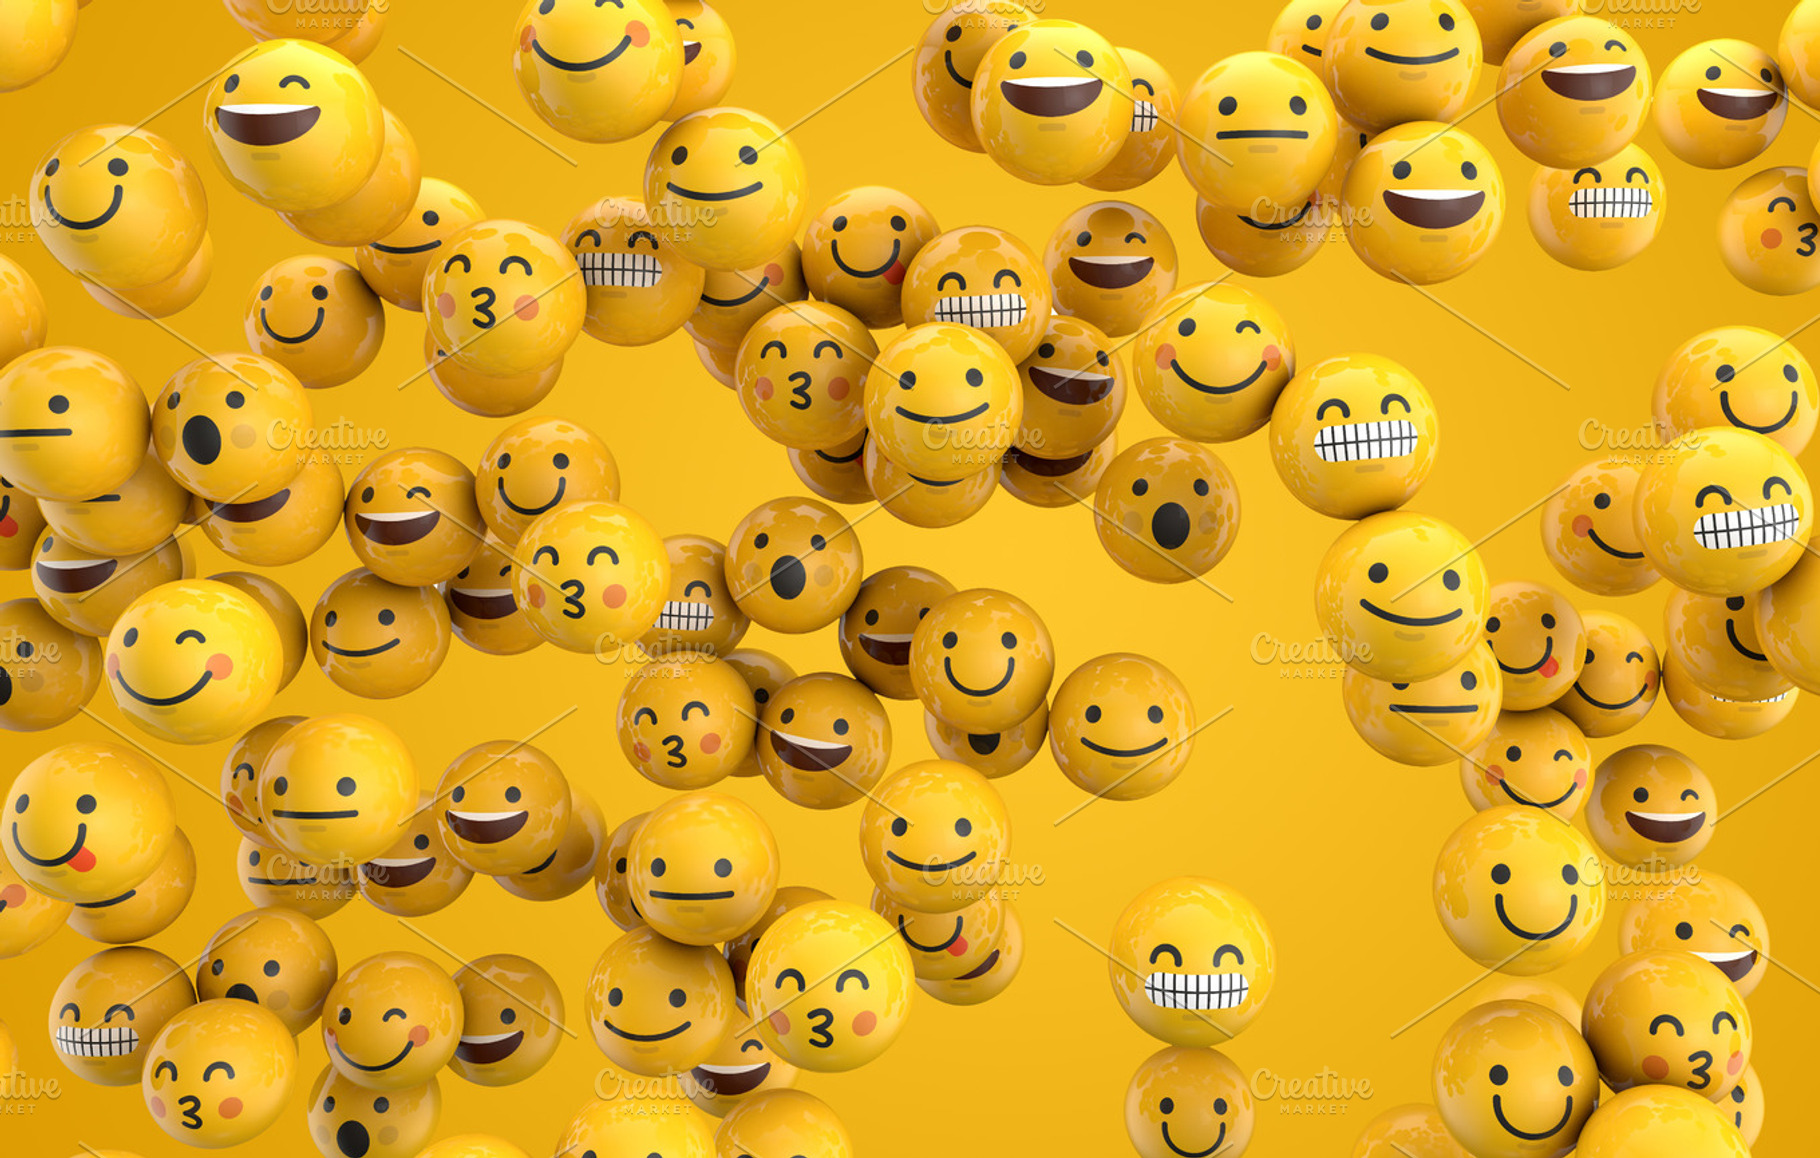 Download 74 Background Emoji Gratis